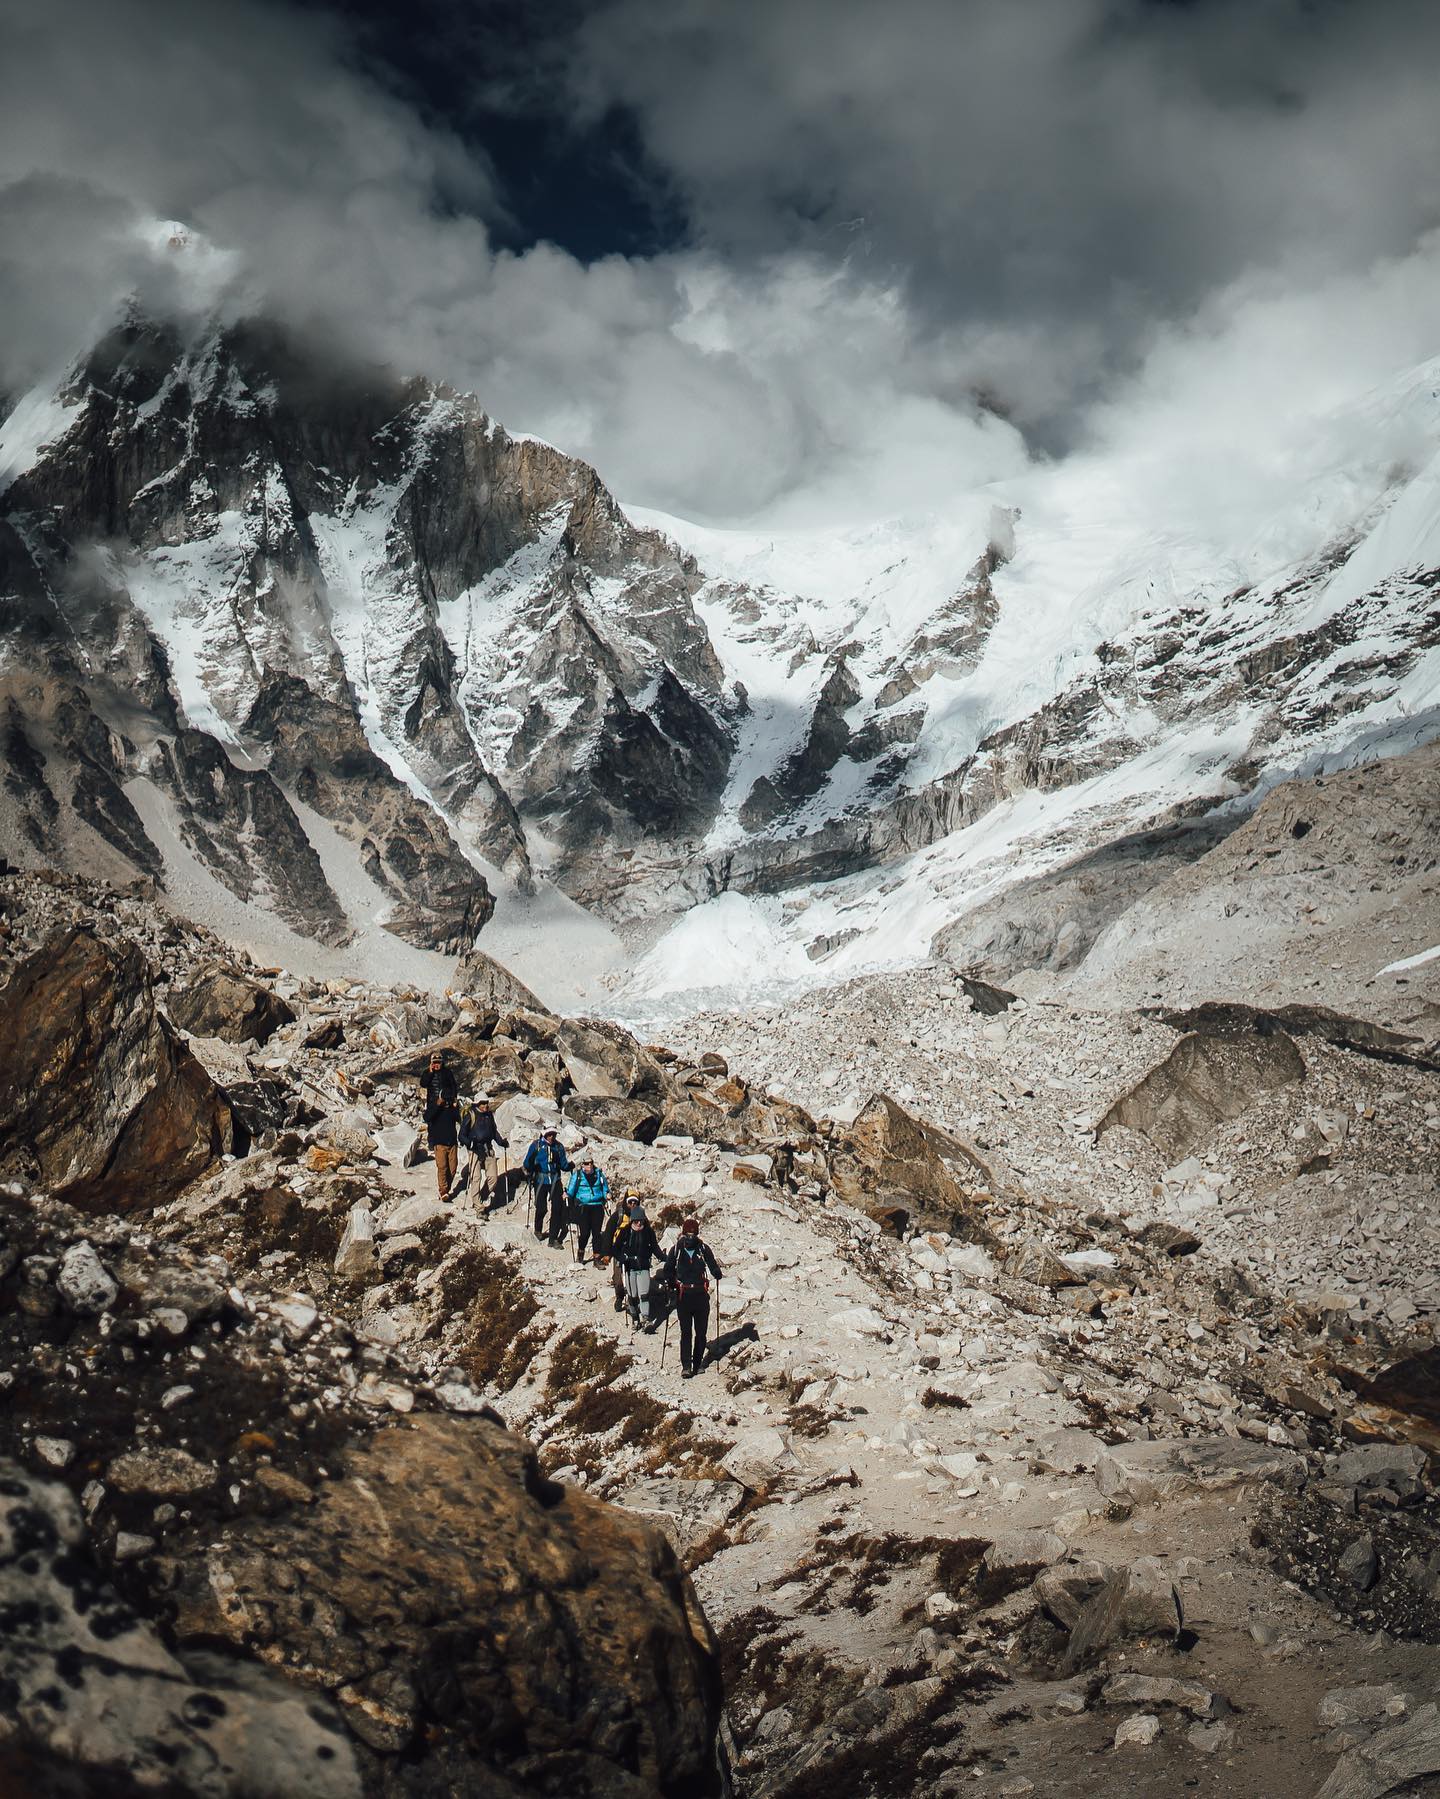 Mount Everest Base Camp trekking group